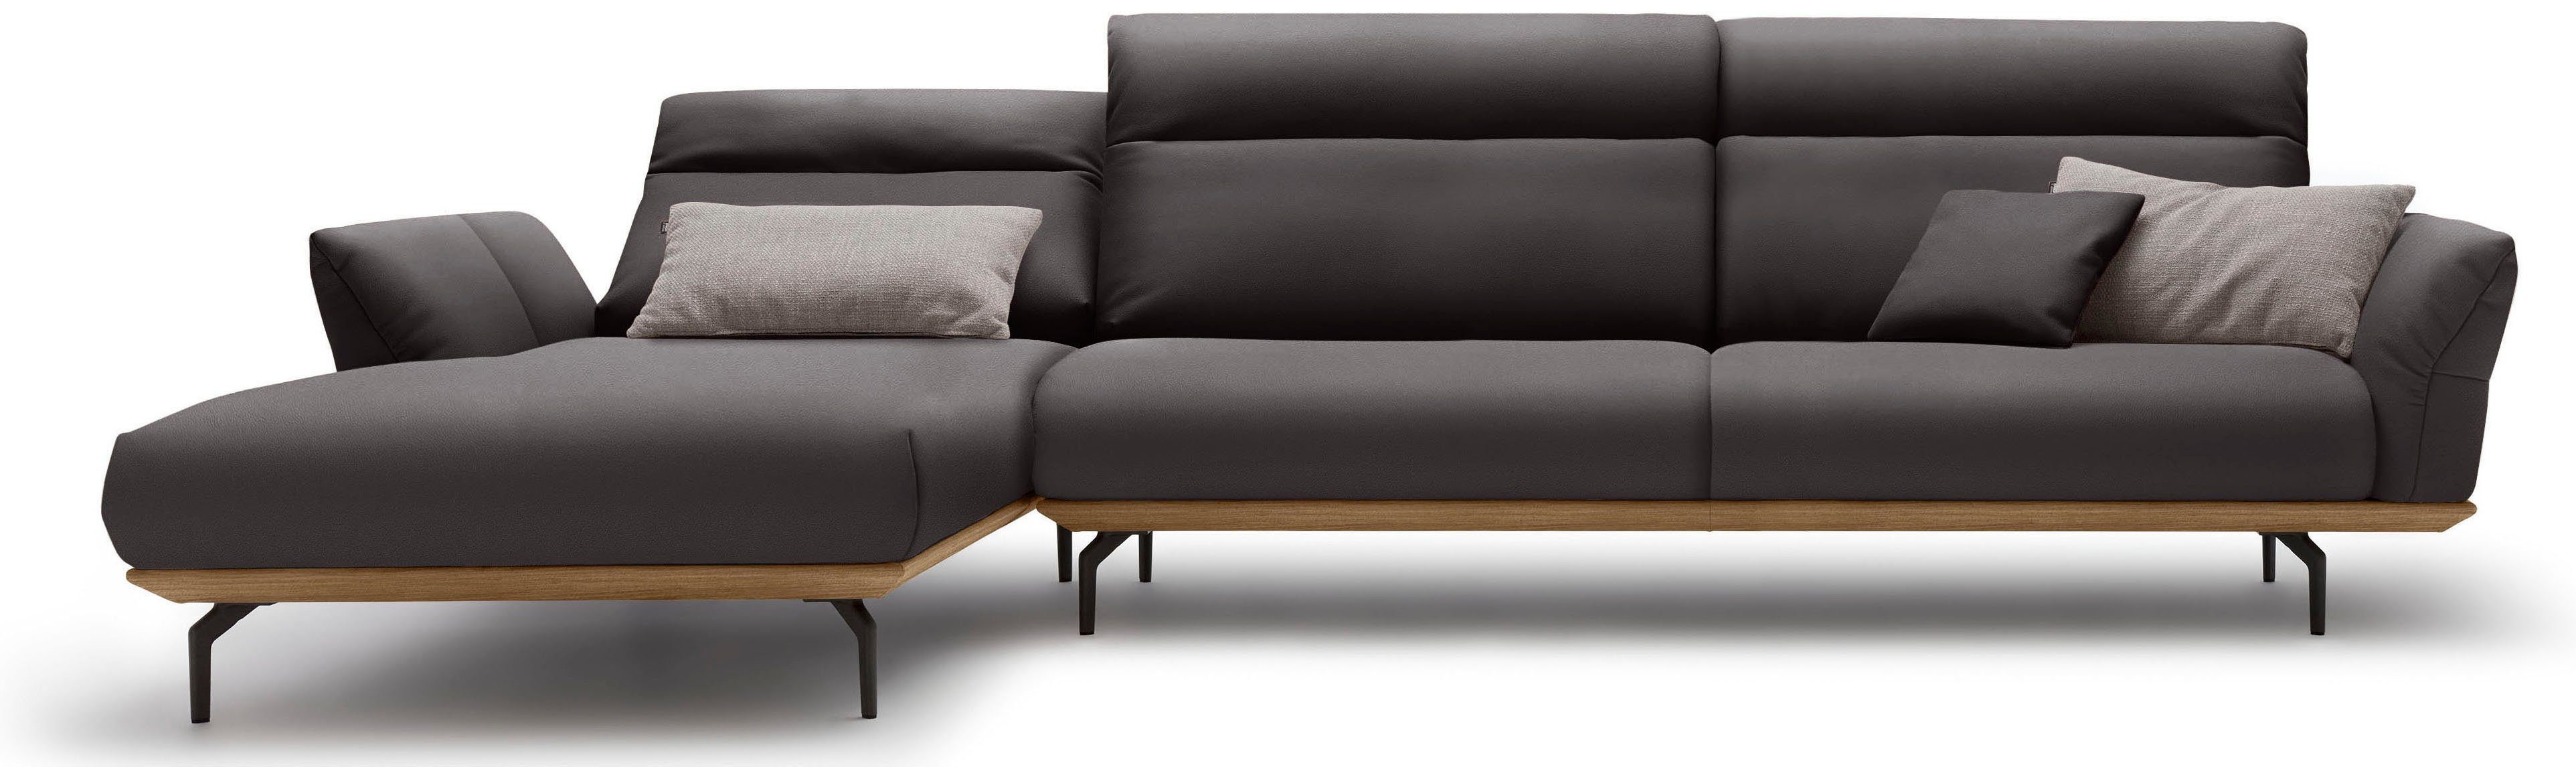 Umbragrau, Nussbaum, cm hs.460, Ecksofa in 338 Winkelfüße Sockel Breite hülsta sofa in